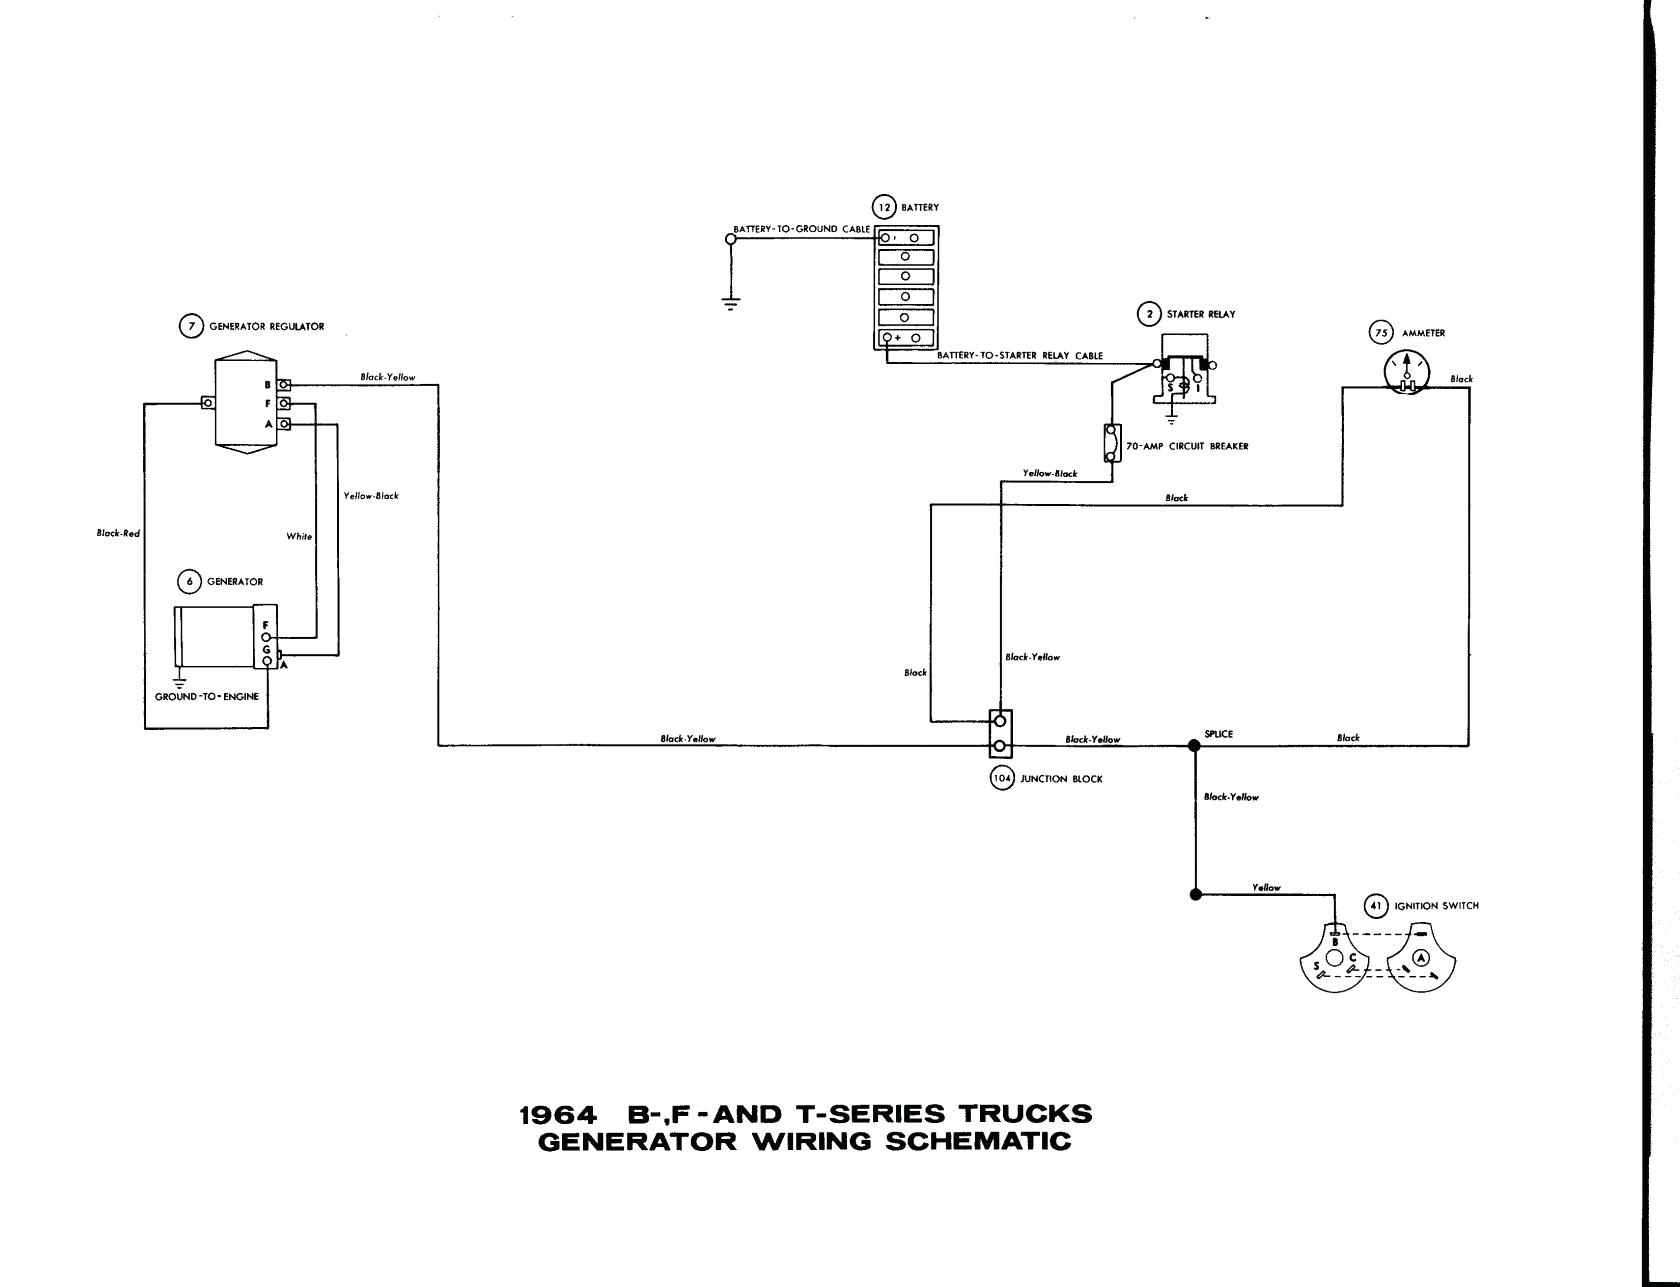 Delco Remy Cs130 Alternator Wiring Diagram Upgrades And Gm Lively 20 - Gm 4 Wire Alternator Wiring Diagram